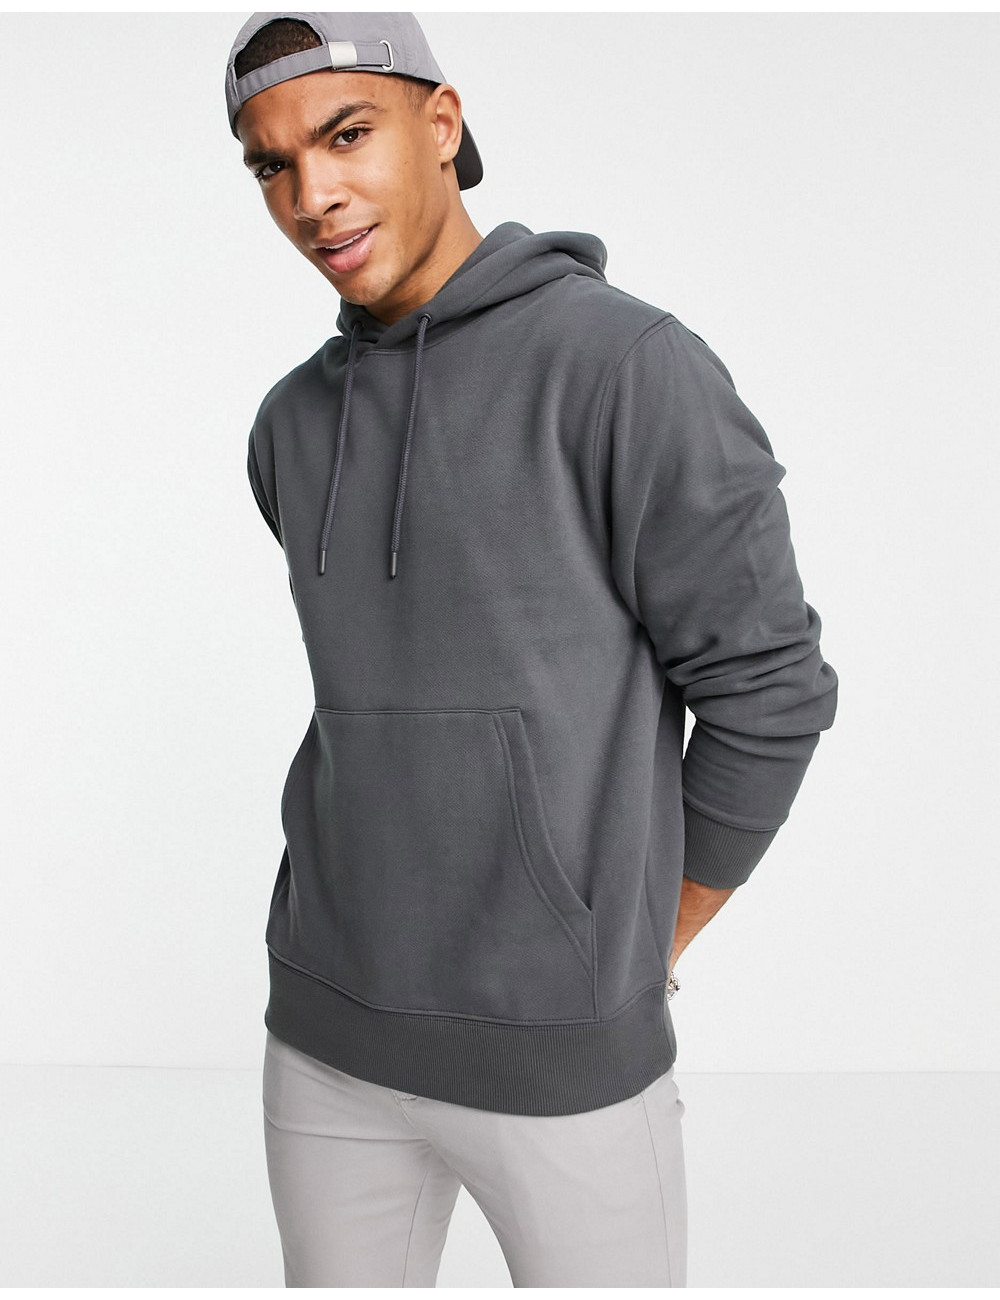 Topman classic hoodie in grey